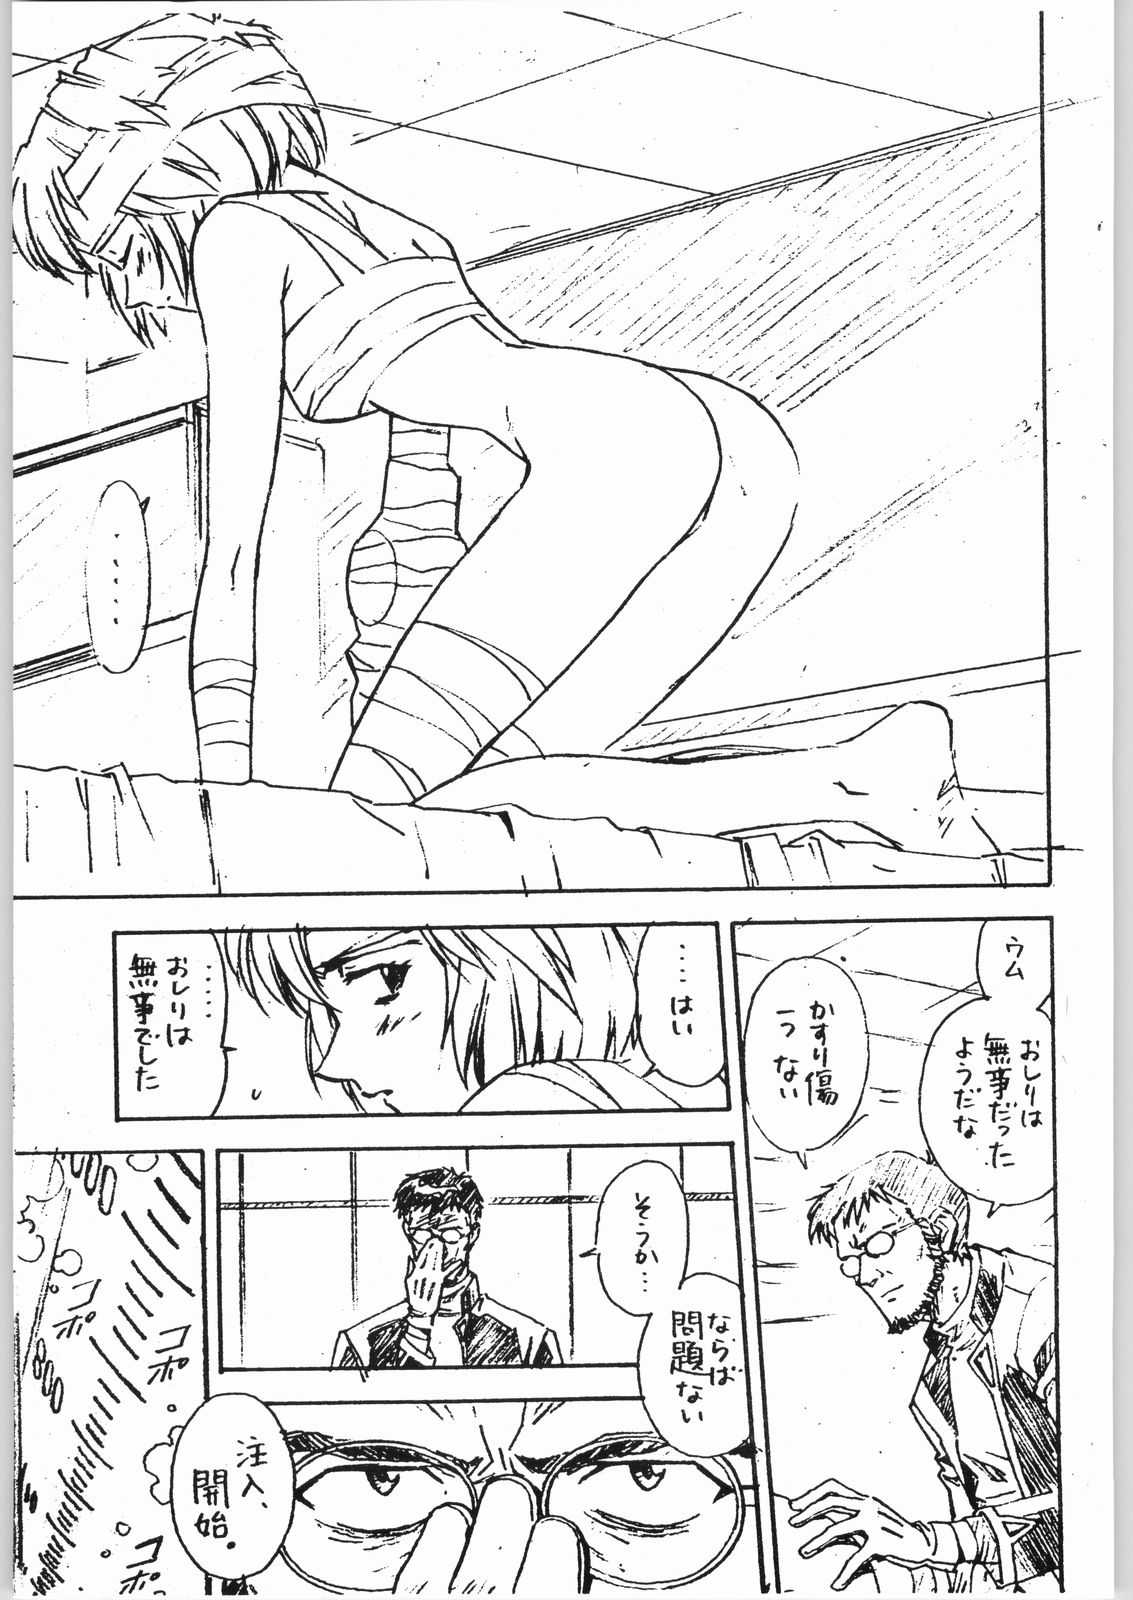 [Various] Aa... Natsukashi No Heroine Tachi!! 4 Aradukuri [大好き!!ビーチクン] ああっ。。。なつかしのヒロイン達!!4荒づくり